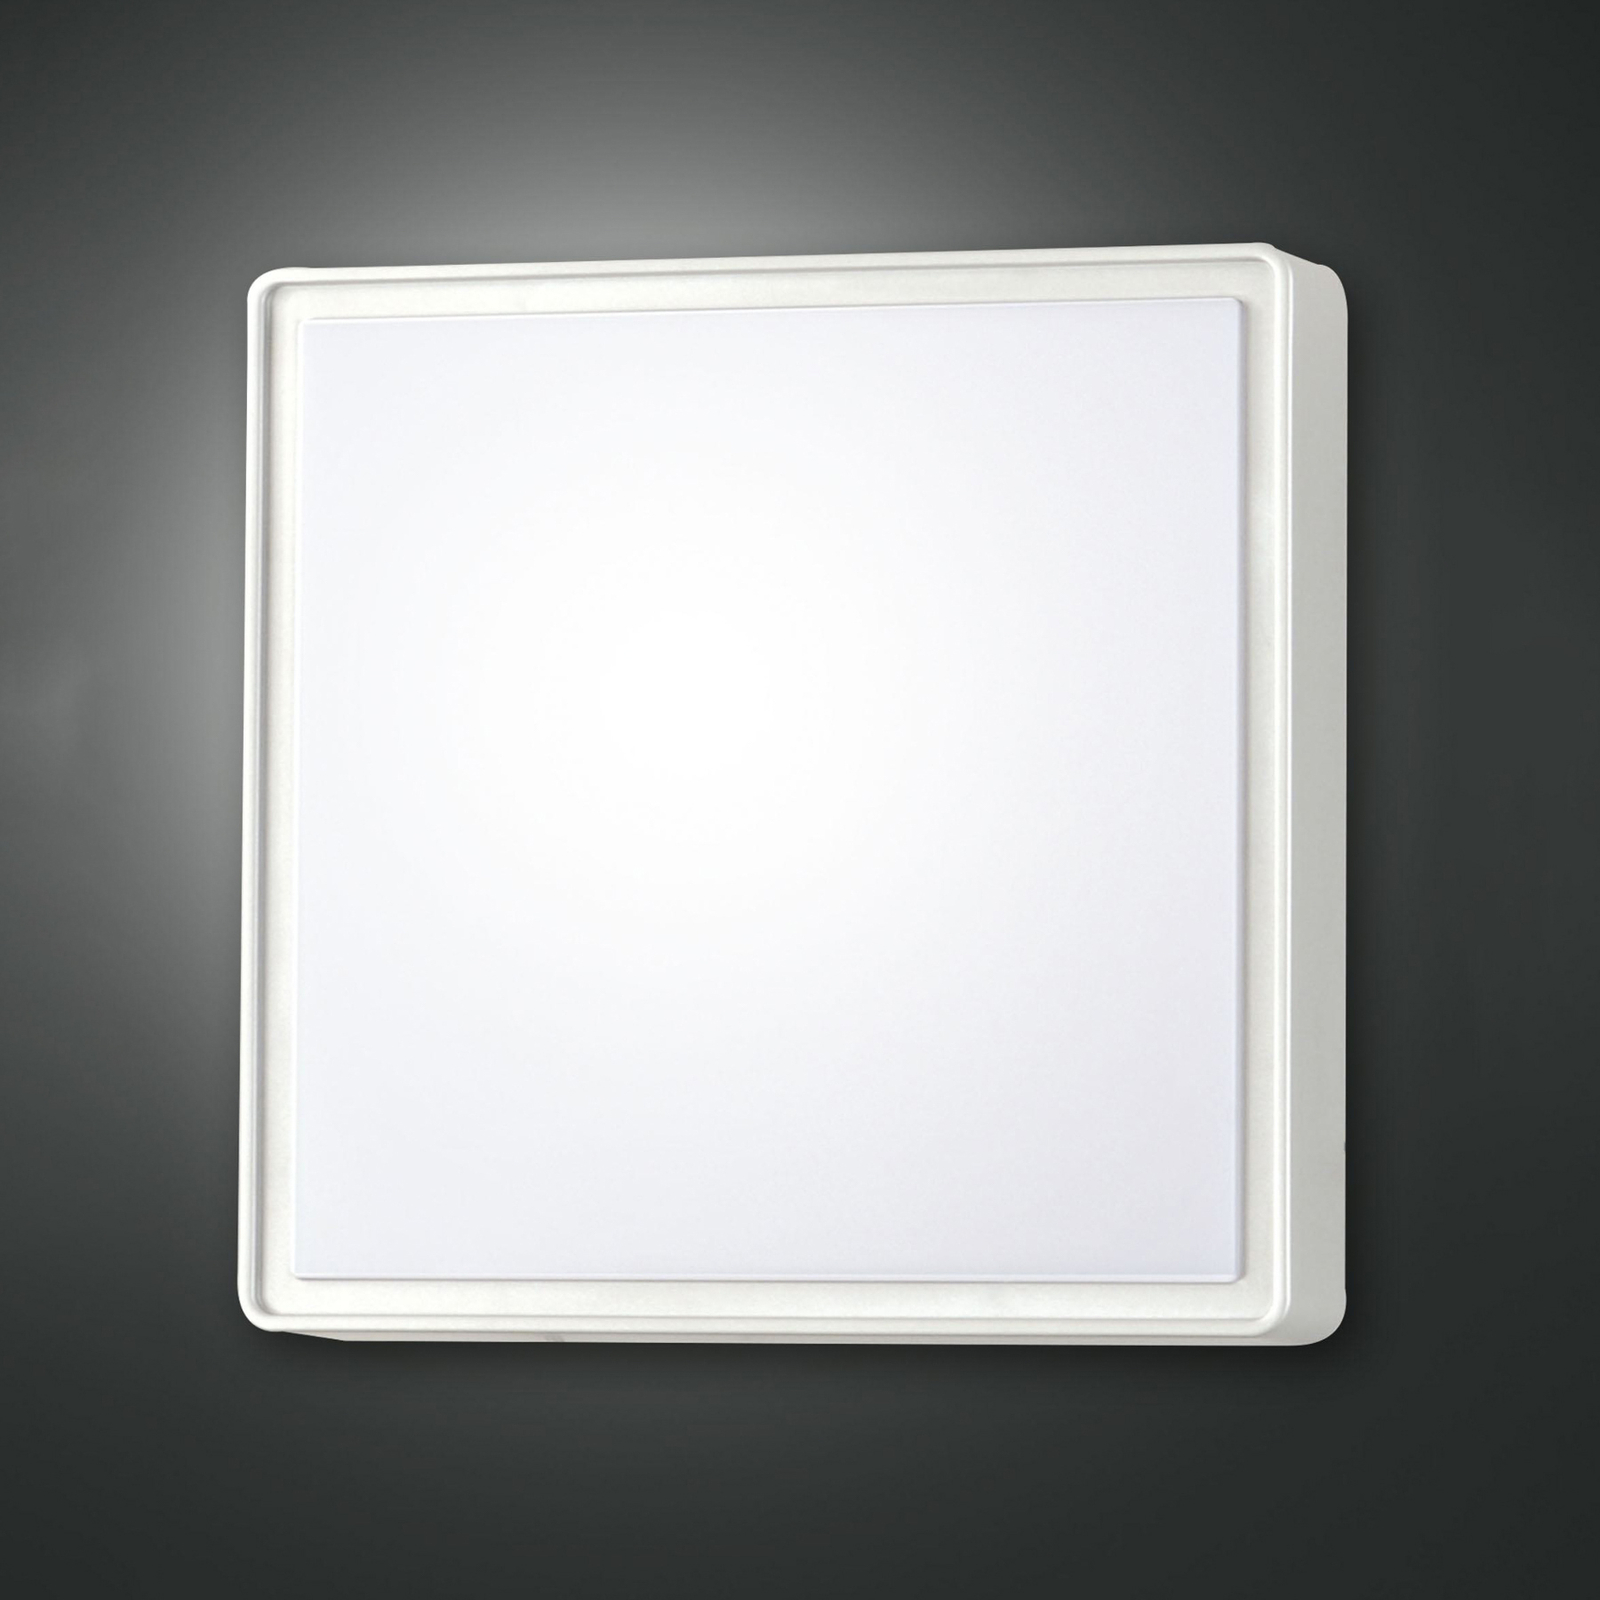 Wandlamp Oban, 30 cm x 30 cm, sensor, 2 x E27, wit, IP65